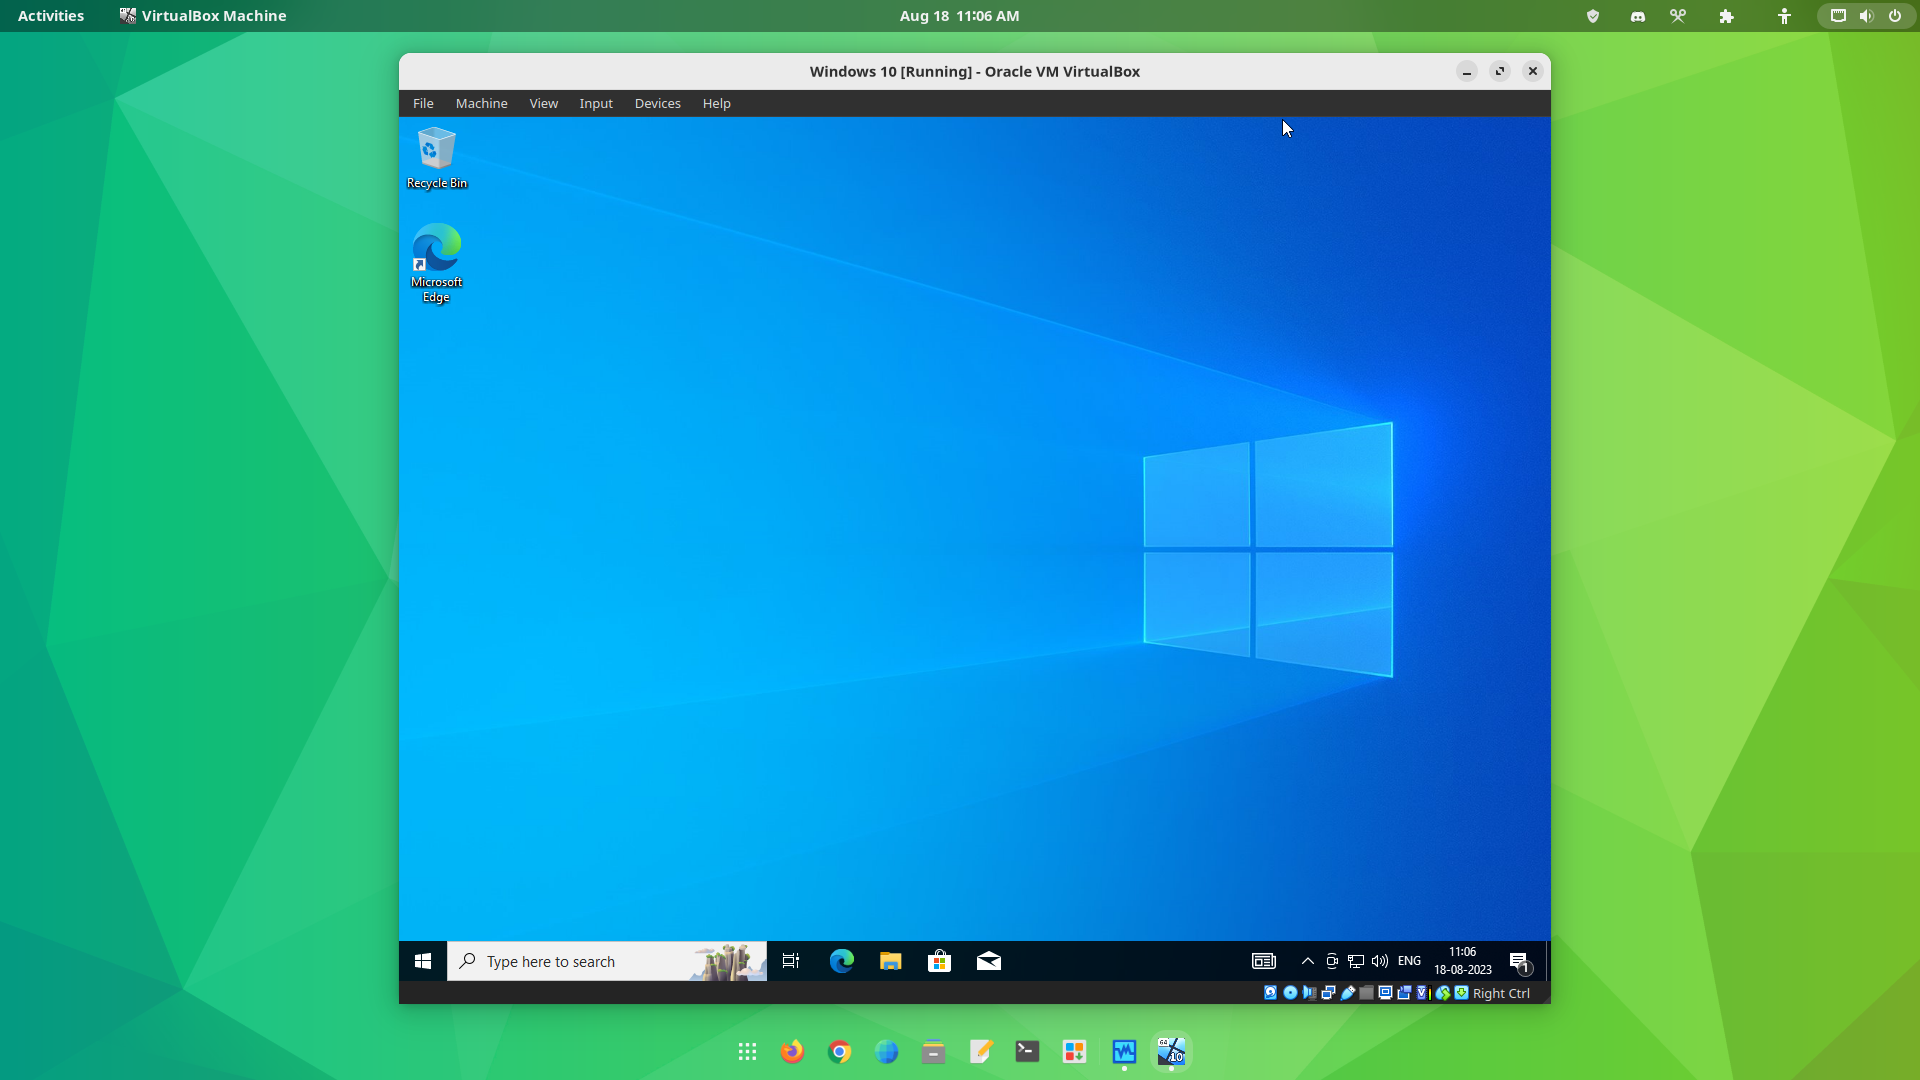 Windows 10 running in VirtualBox inside Manjaro Linux